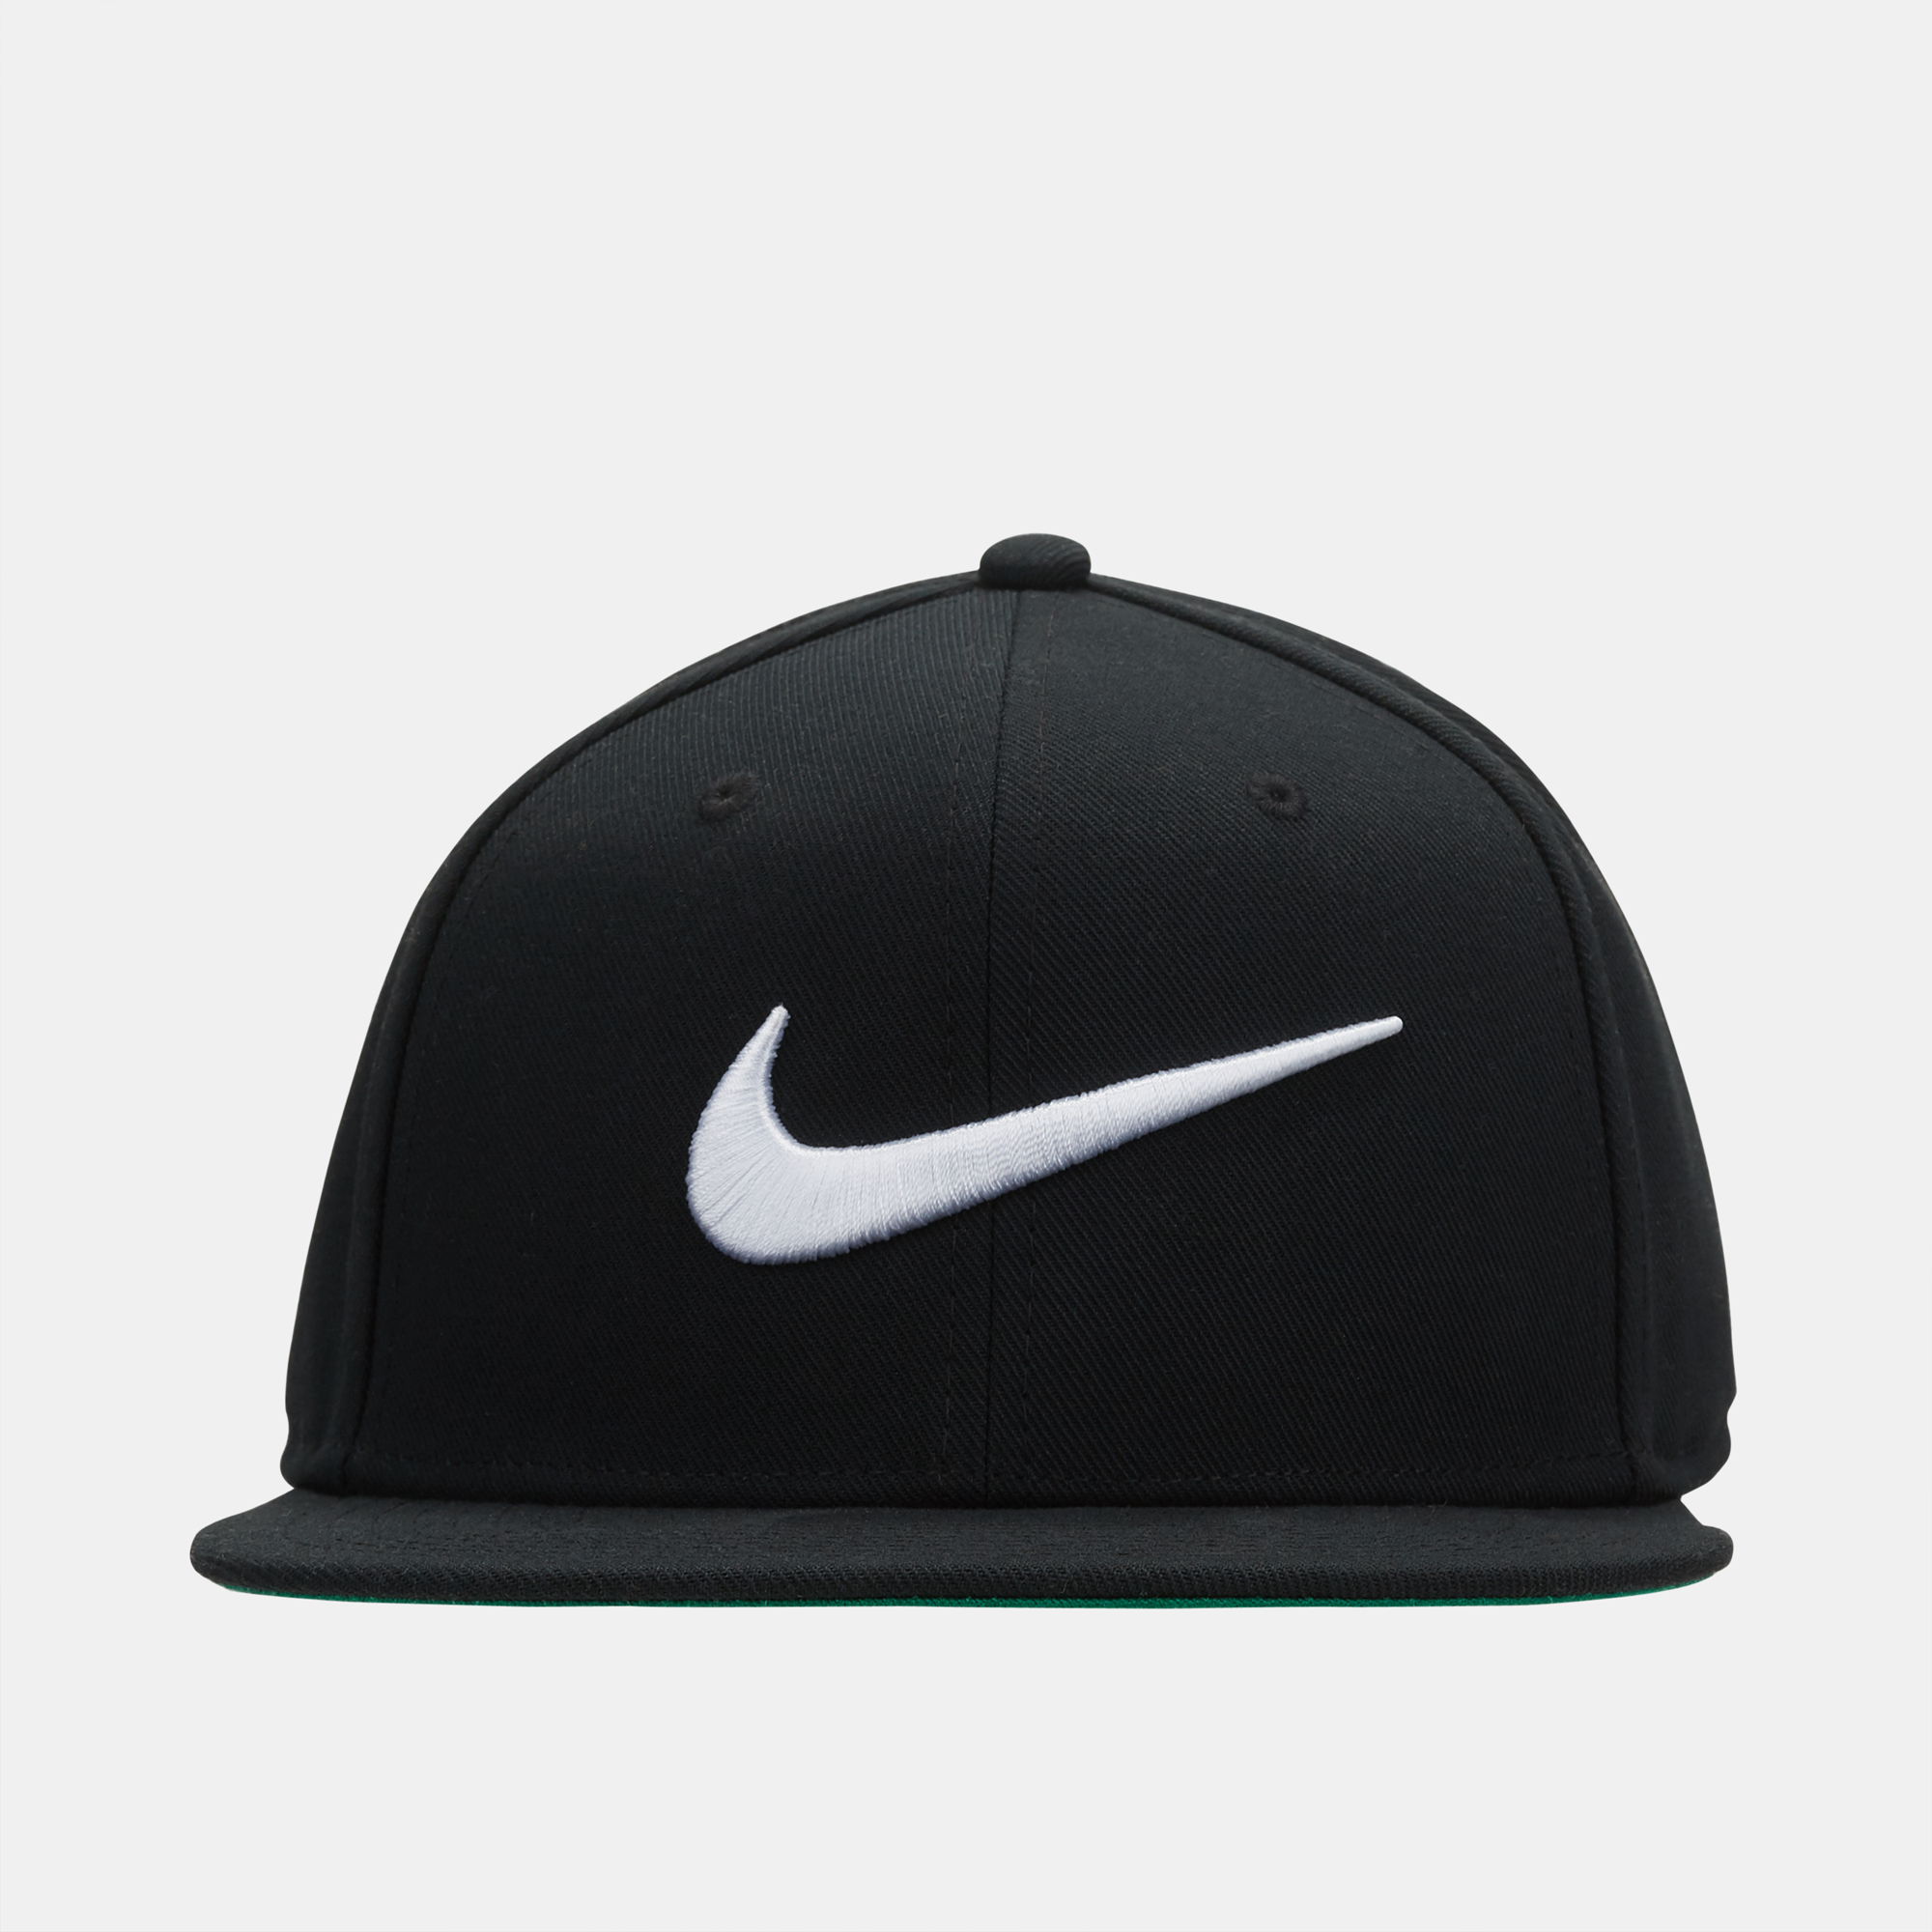 Shop Black Nike Pro Sportswear Swoosh Classic Cap for Mens by Nike | SSS